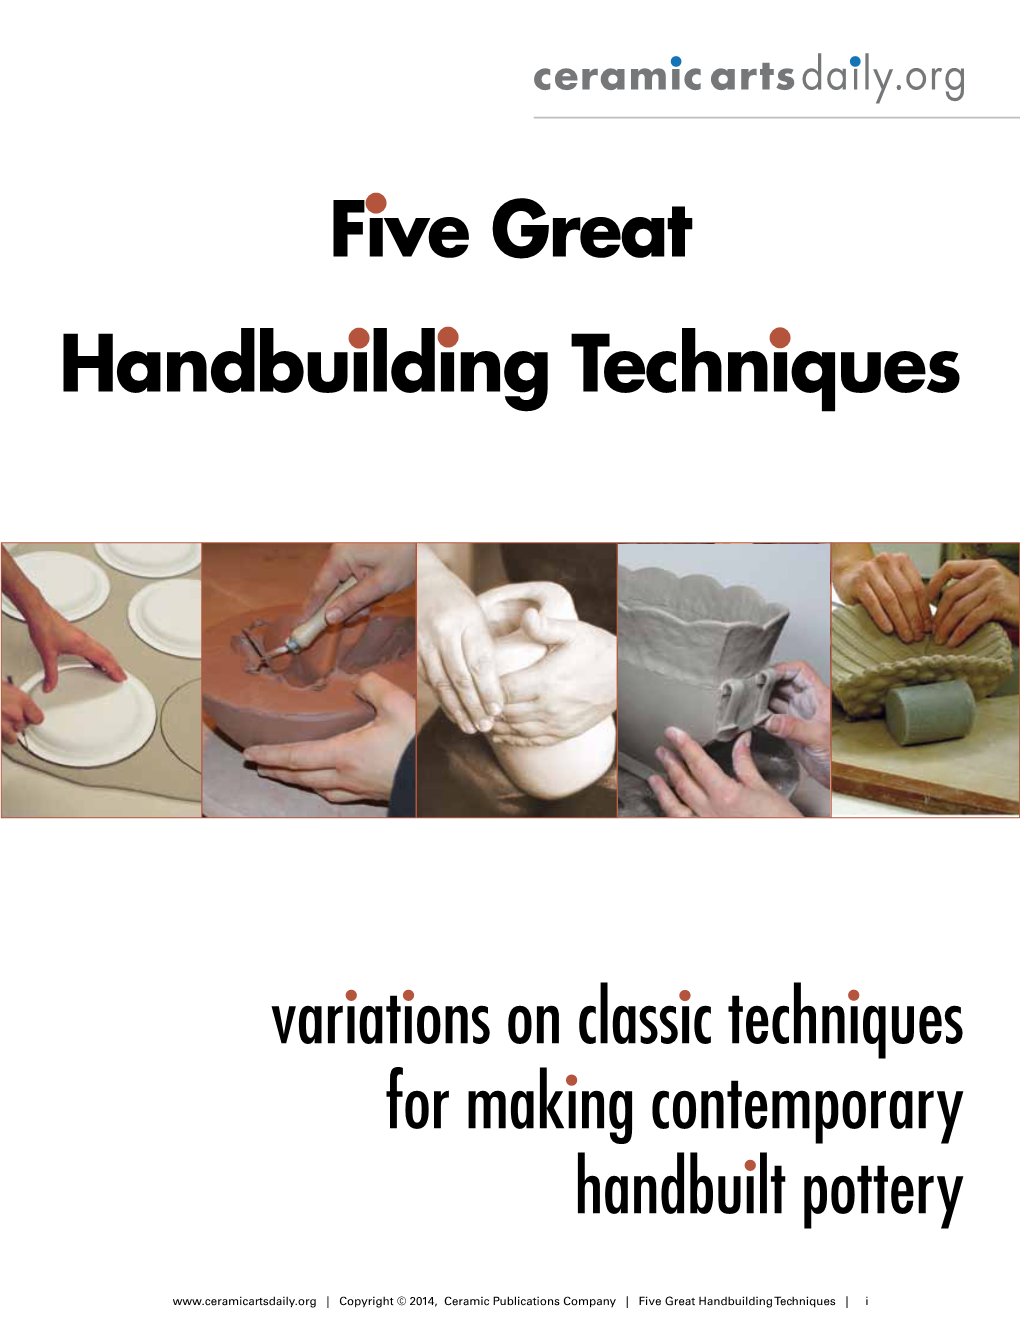 5 Great Handbuilding Techniques